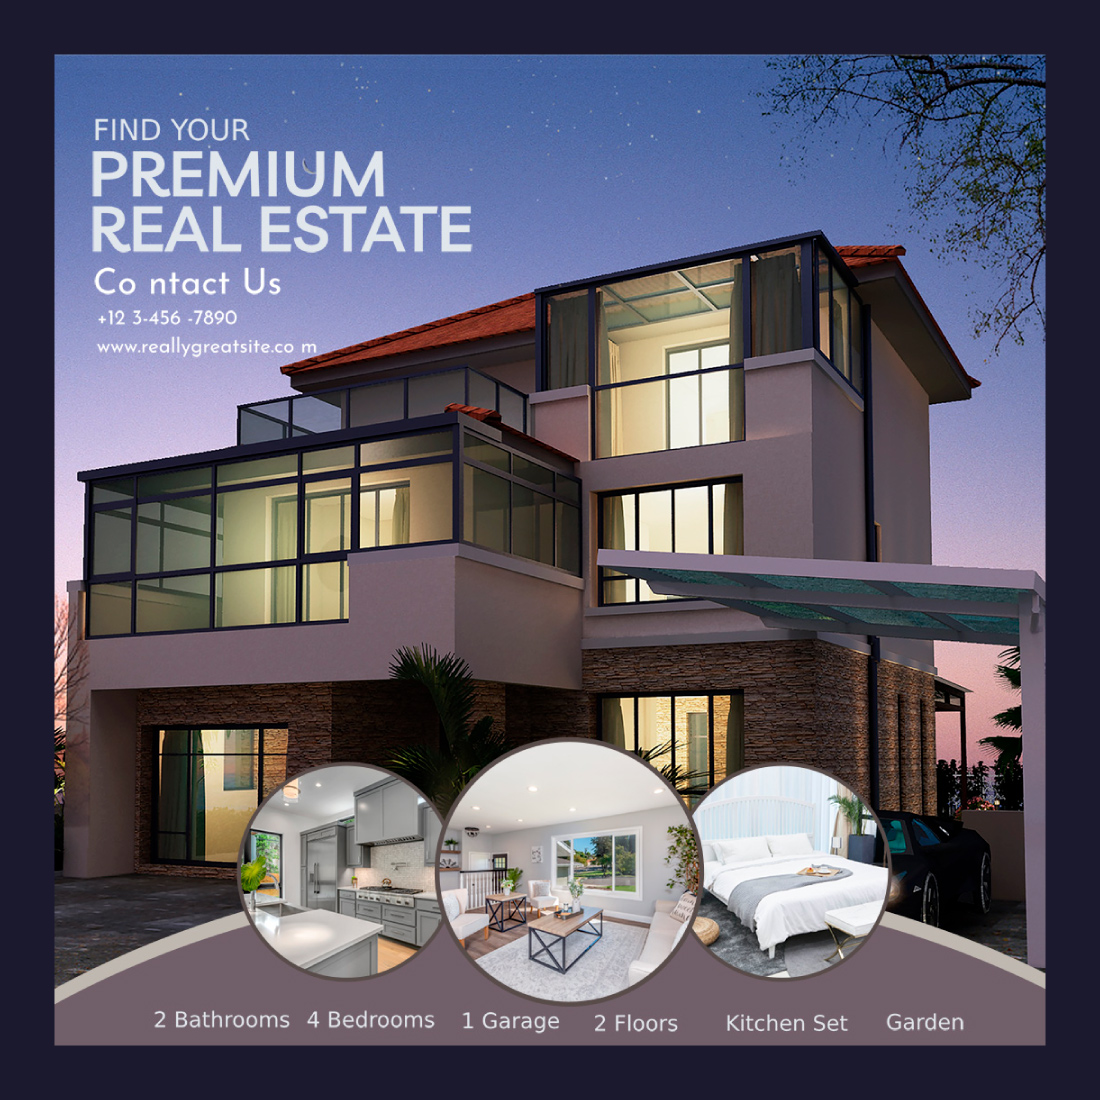 Blue Minimalist Premium Real Estate Instagram Post preview image.